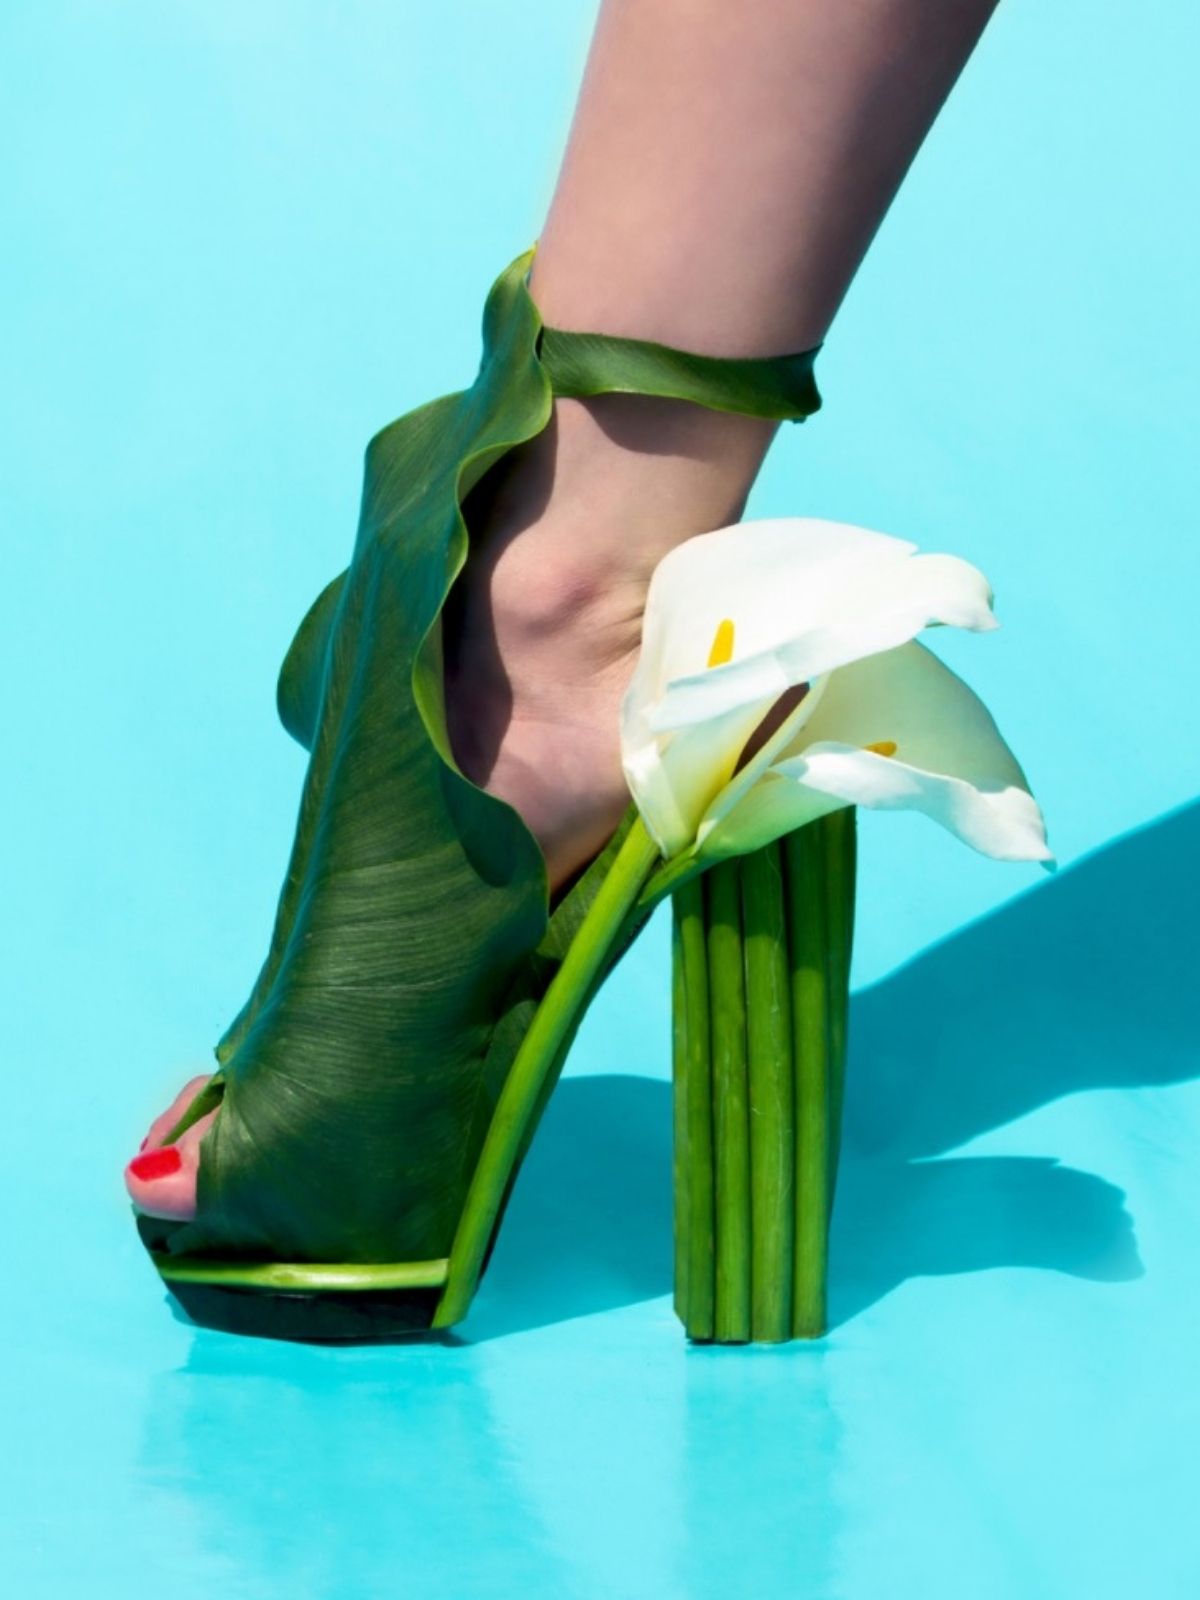 Make a Fashion Statement With These Unique Green Slippers - calla shoes - Pantoufle de Vert article on thursd